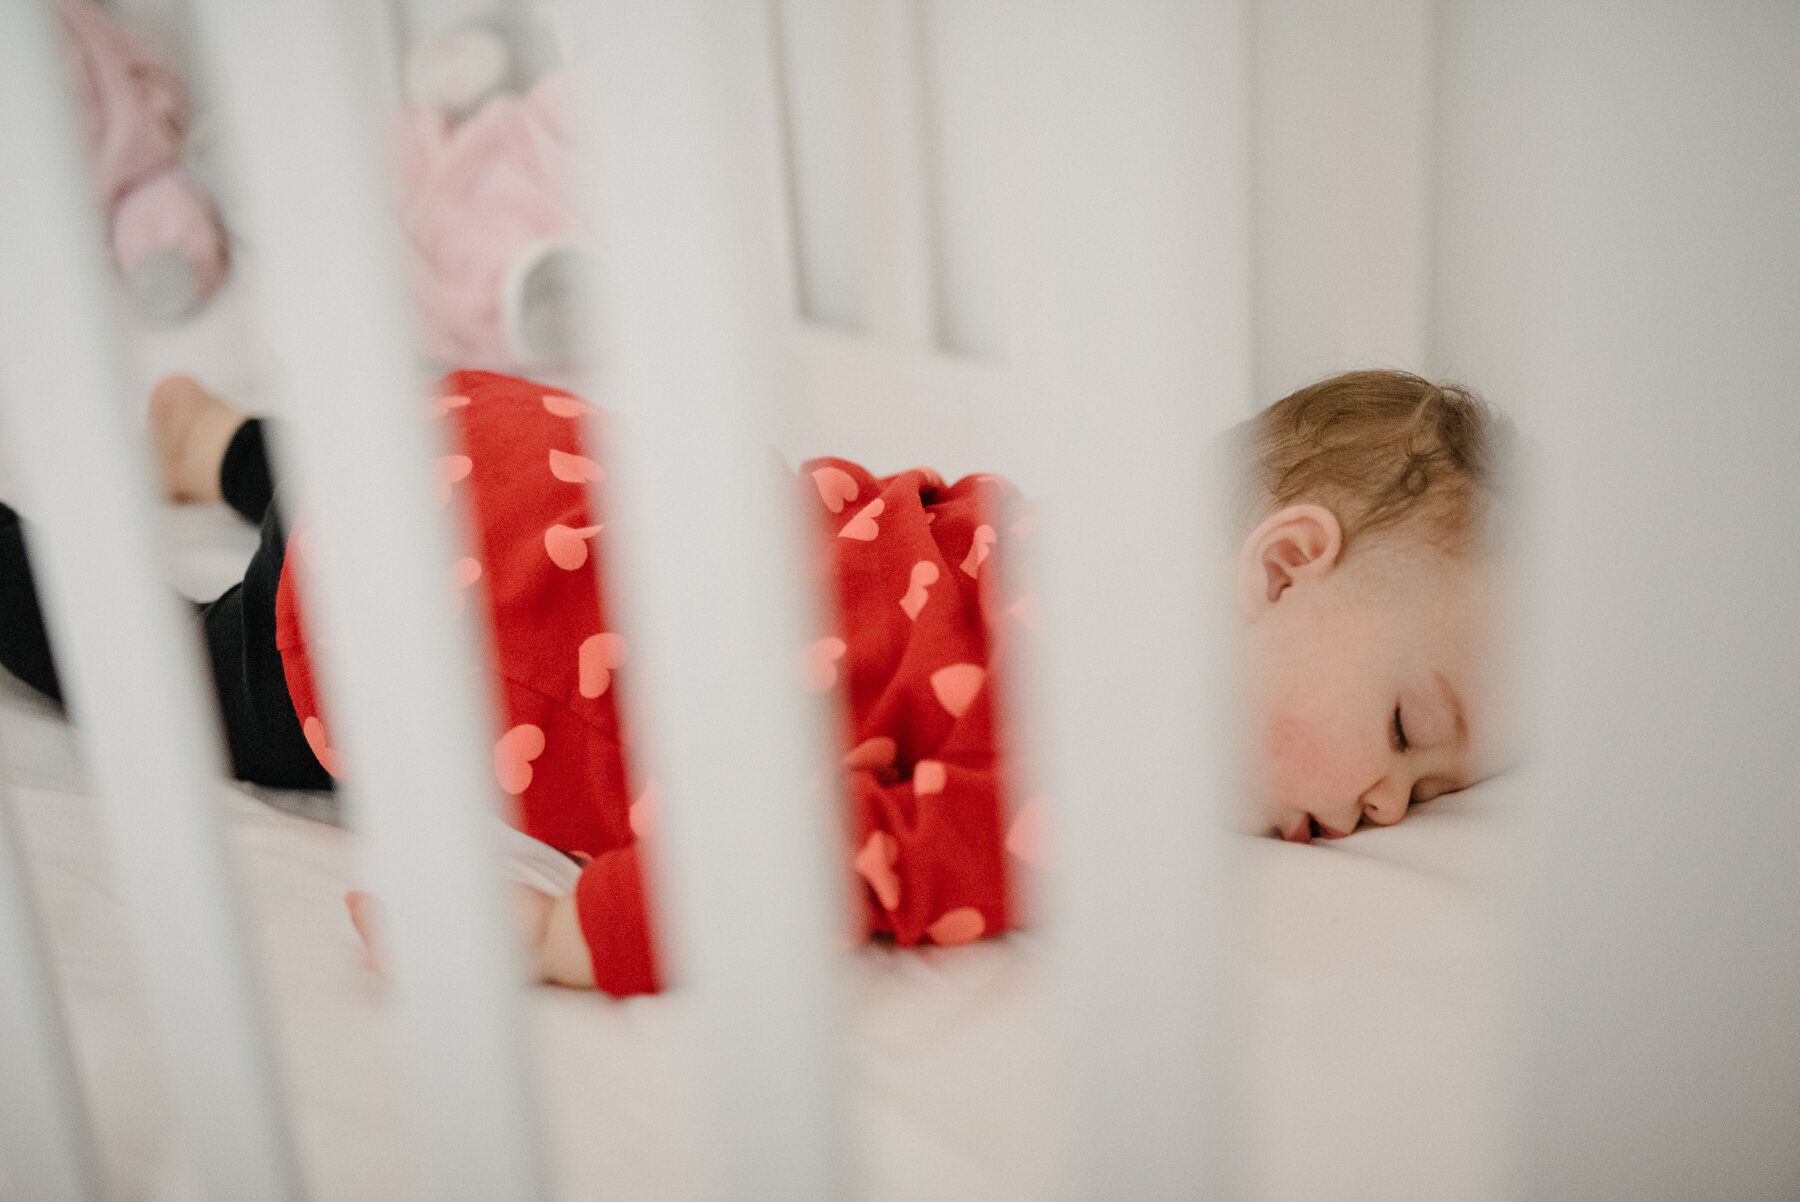 020photo-fillette-endormie-dans-sa-bassinette-photographe-de-famille-a-montreal-marianne-charland-003.jpg